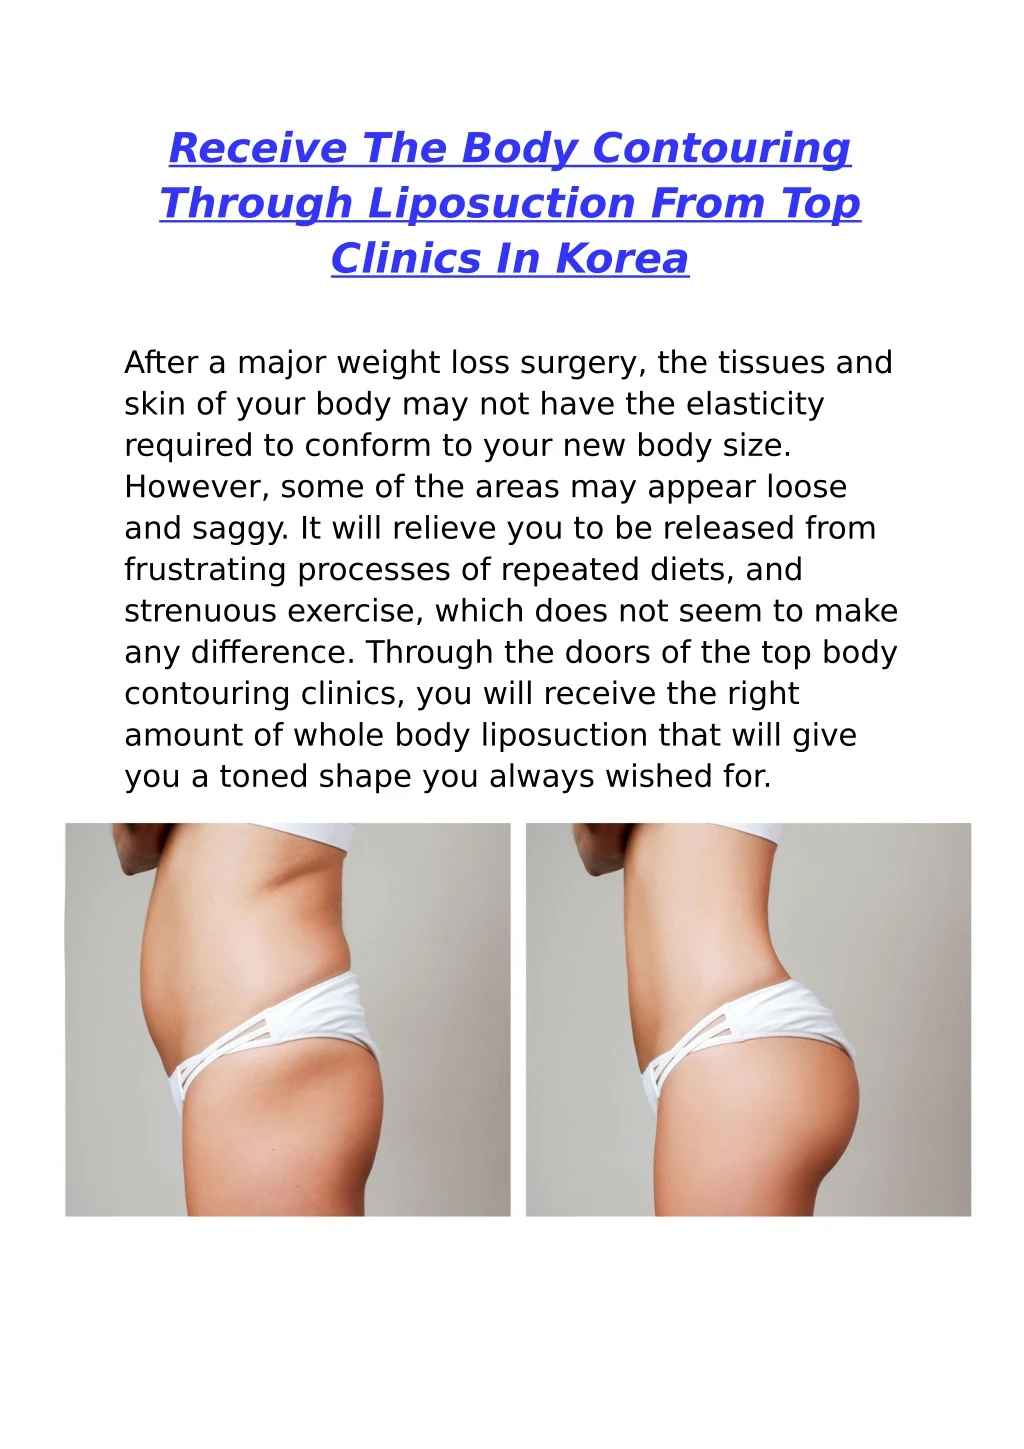 receive the body contouring through liposuction